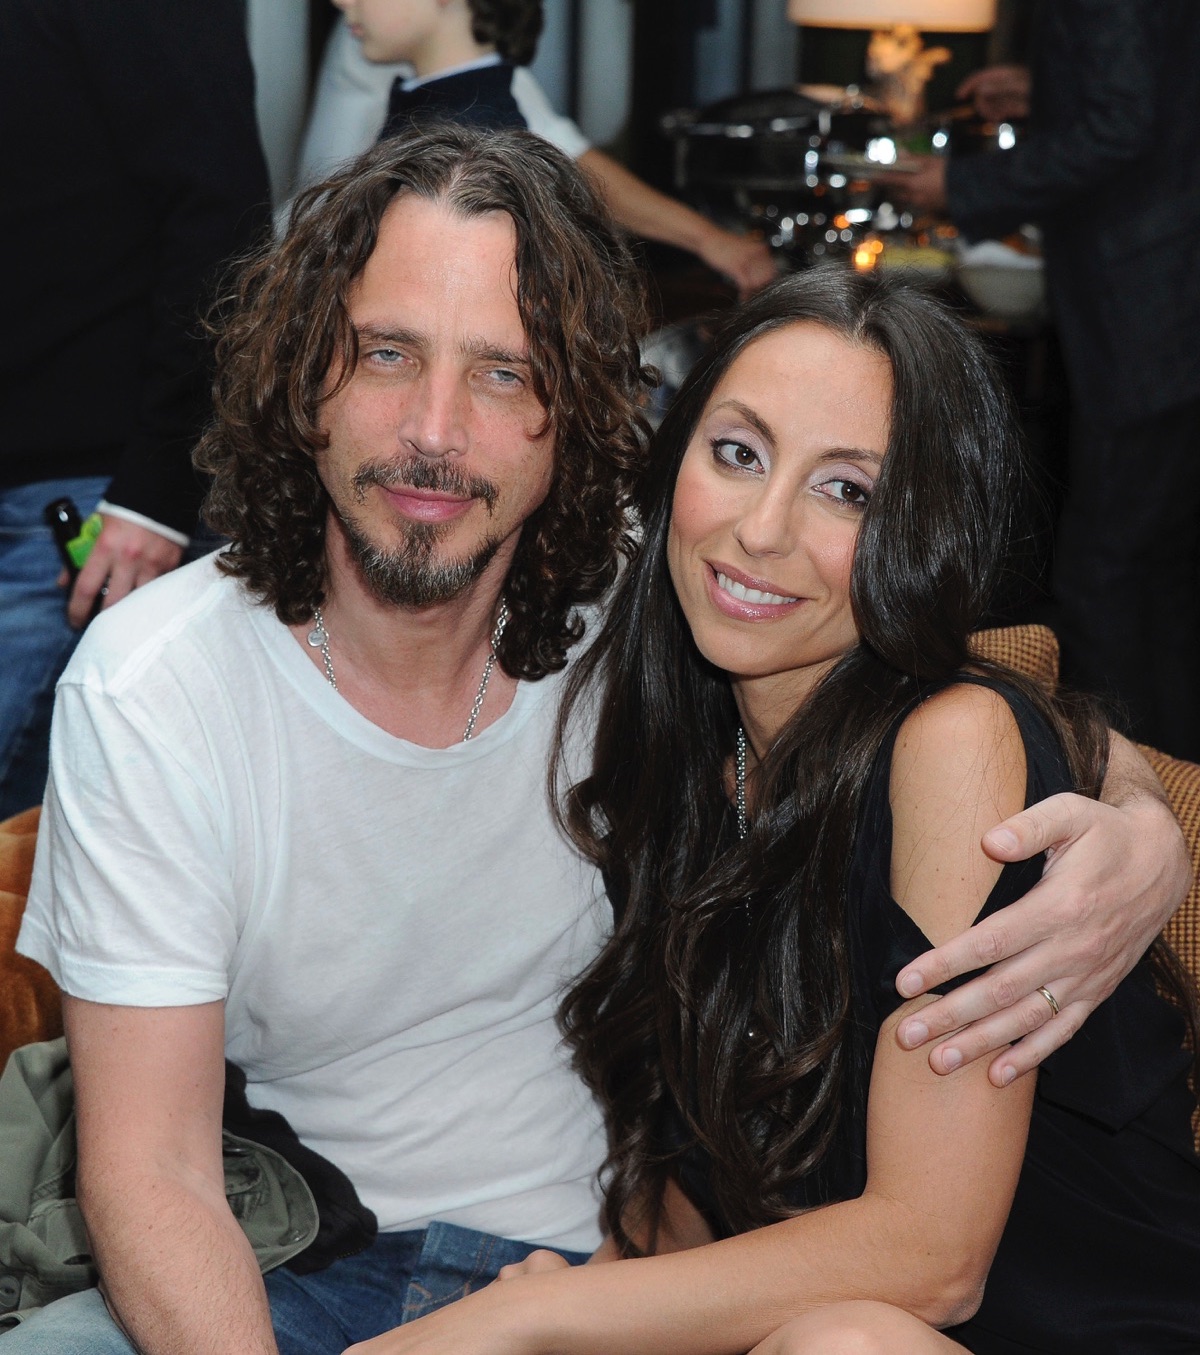 Chris Cornell's Widow Still Awaiting Details About His Death